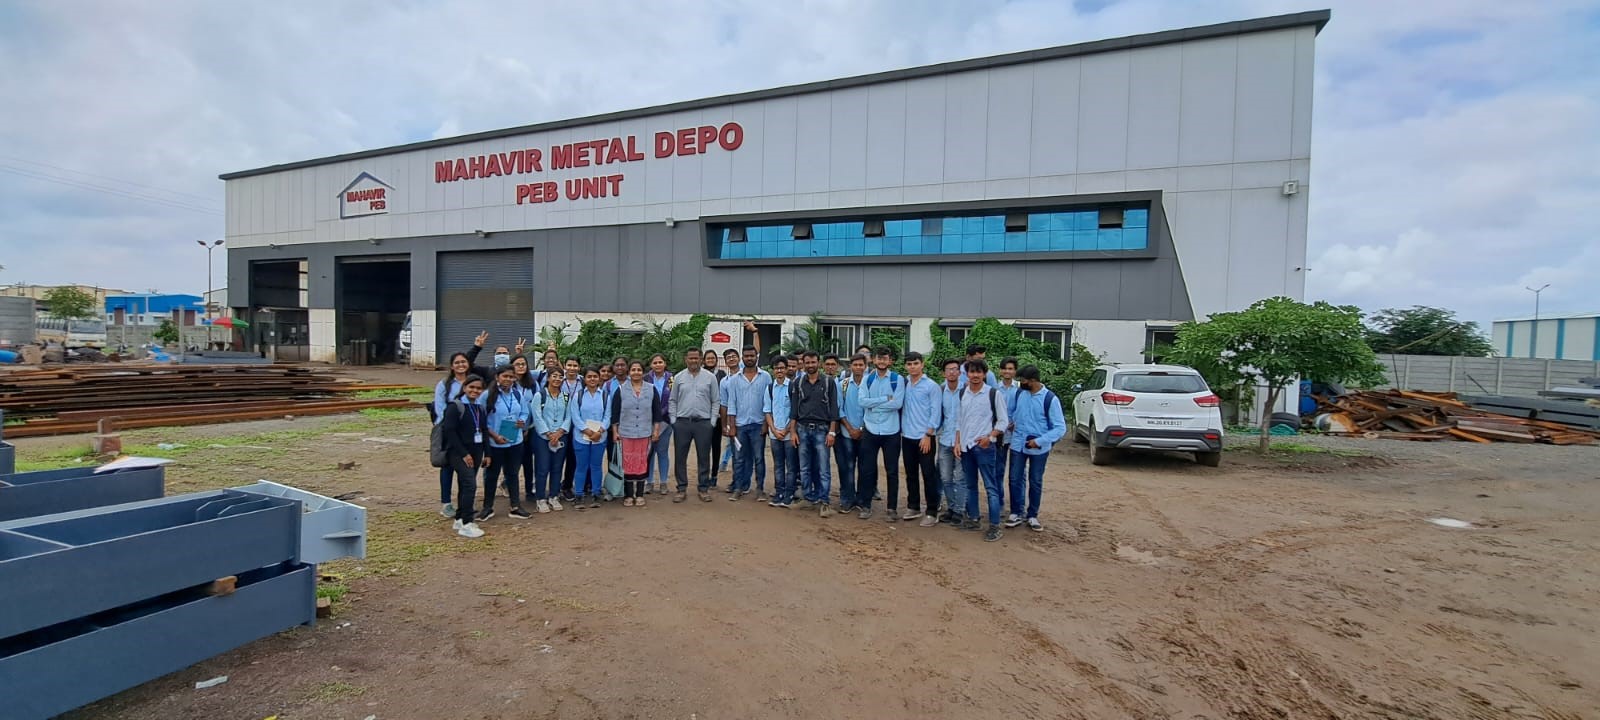 Visit to Mahavir Metal Depot PEB, Karodi (Waluj) Aurangabad